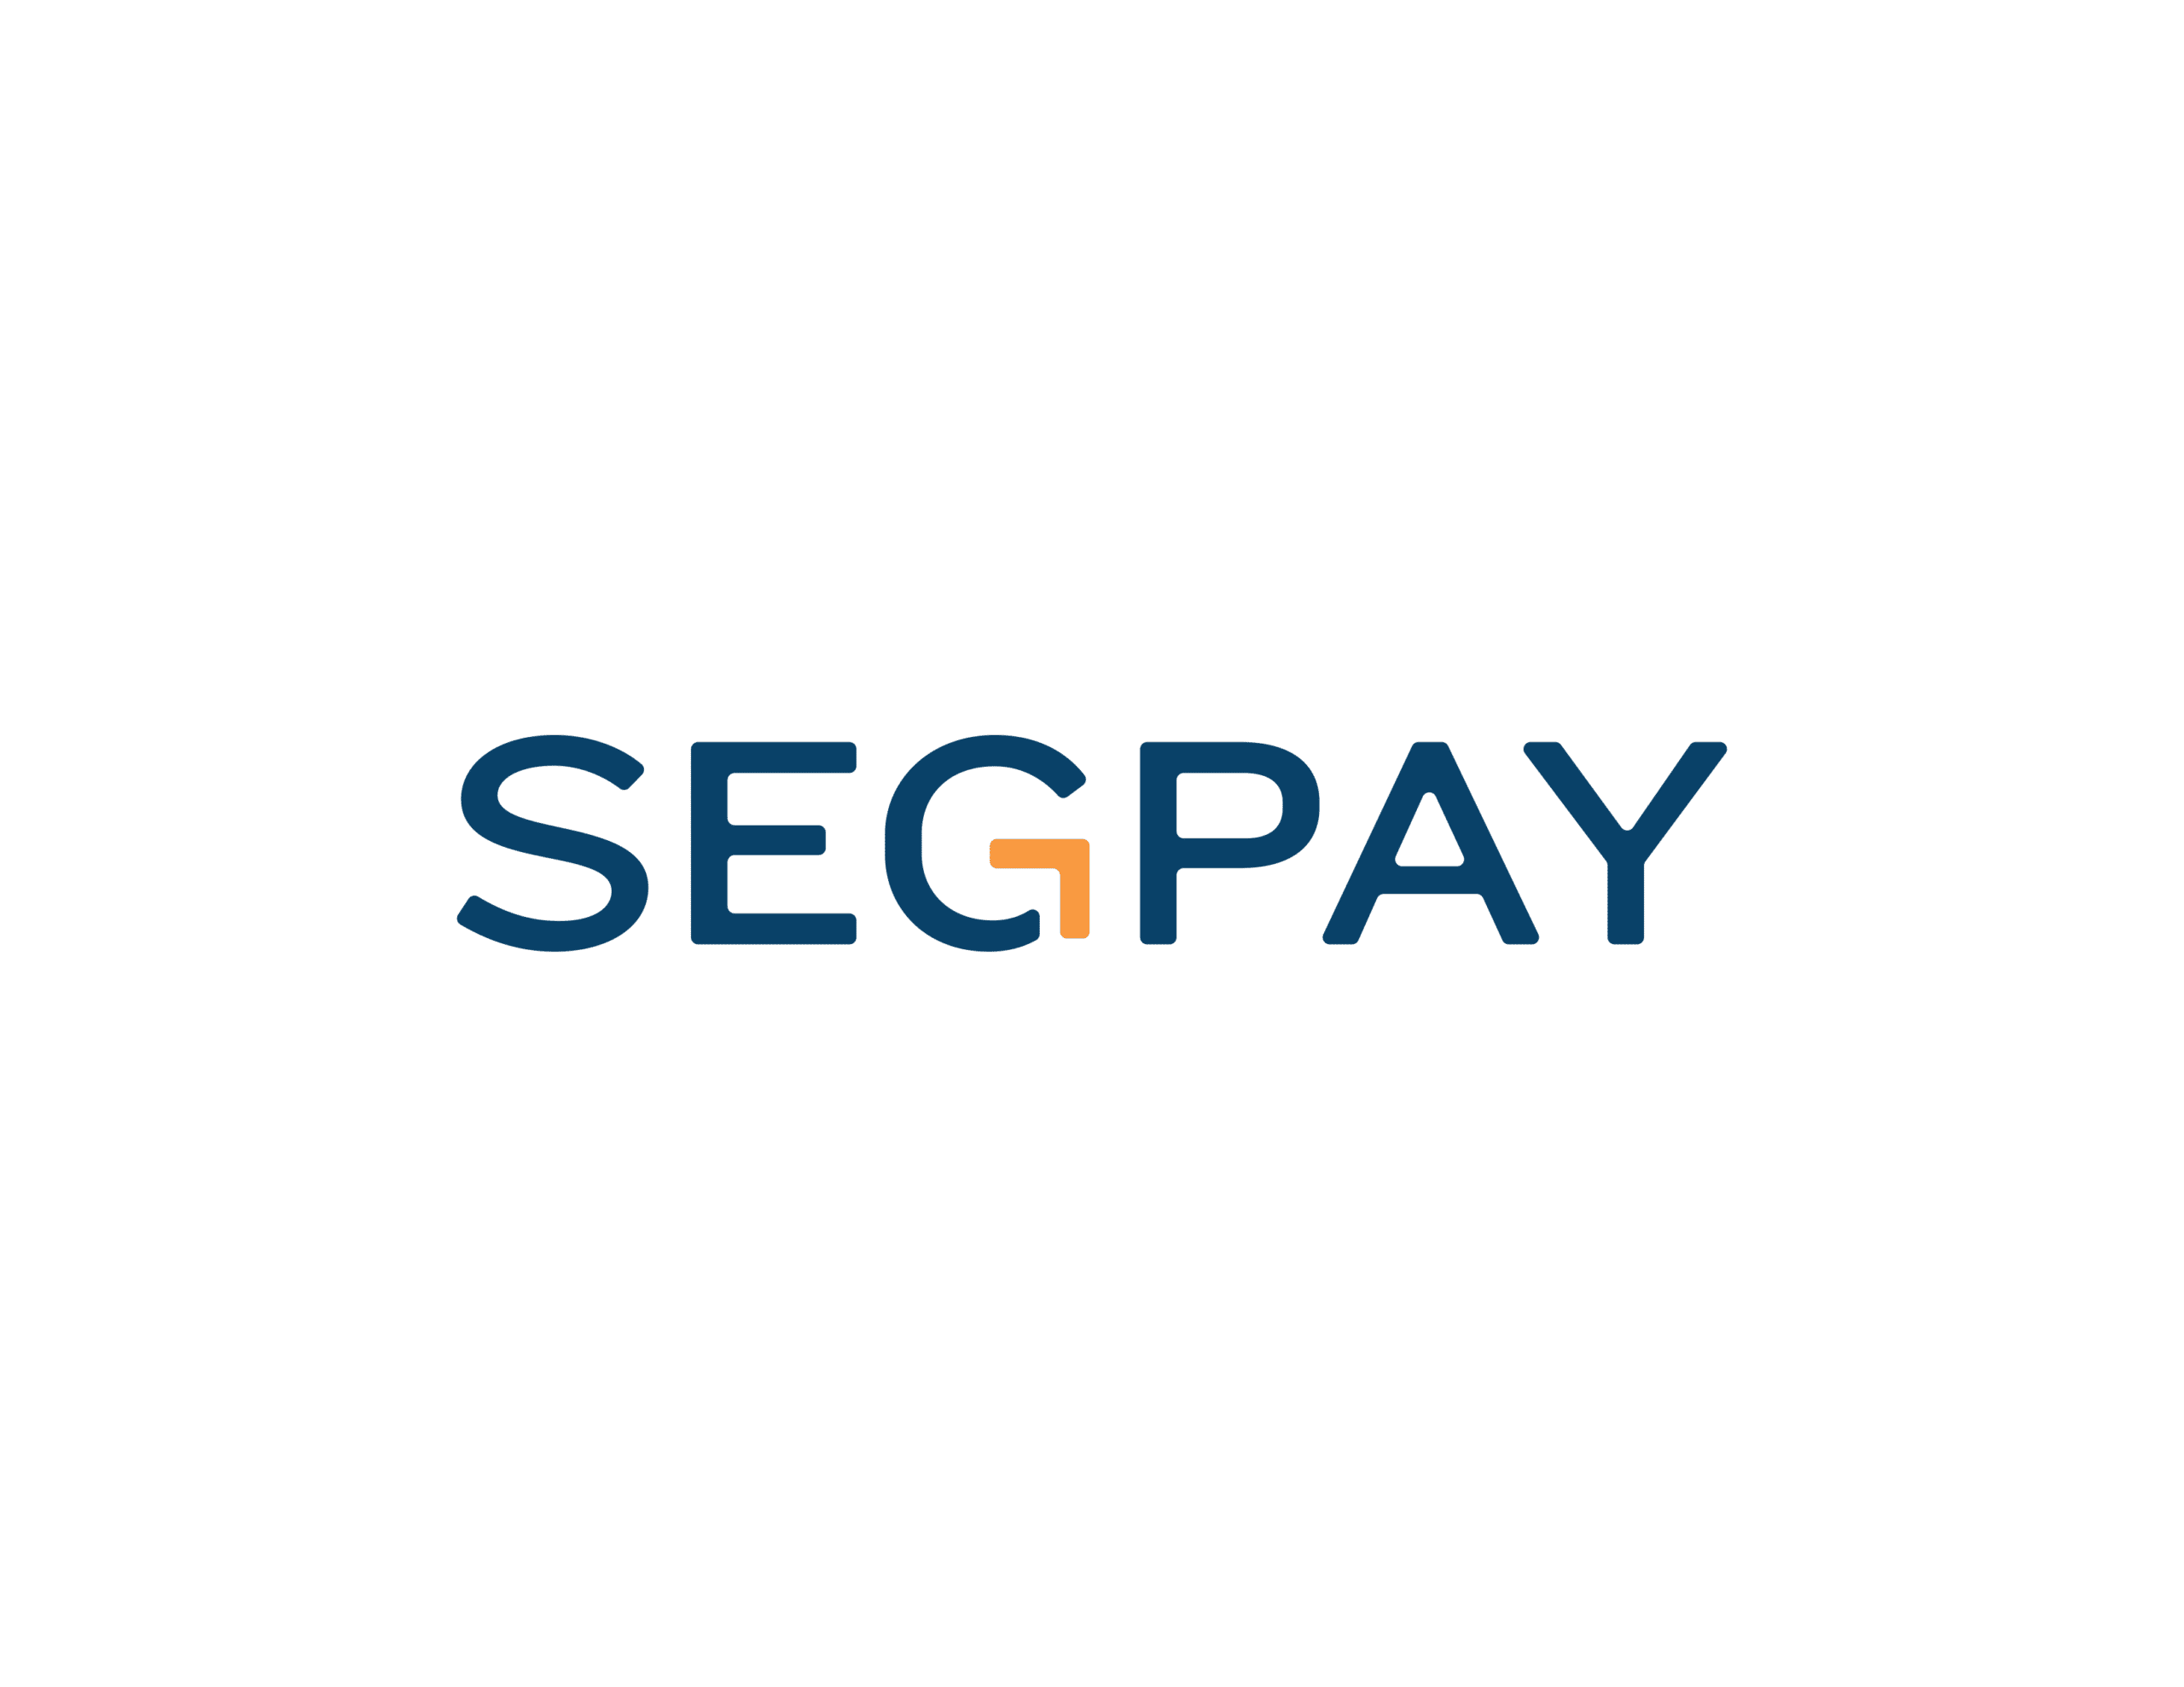 Segpay transaction